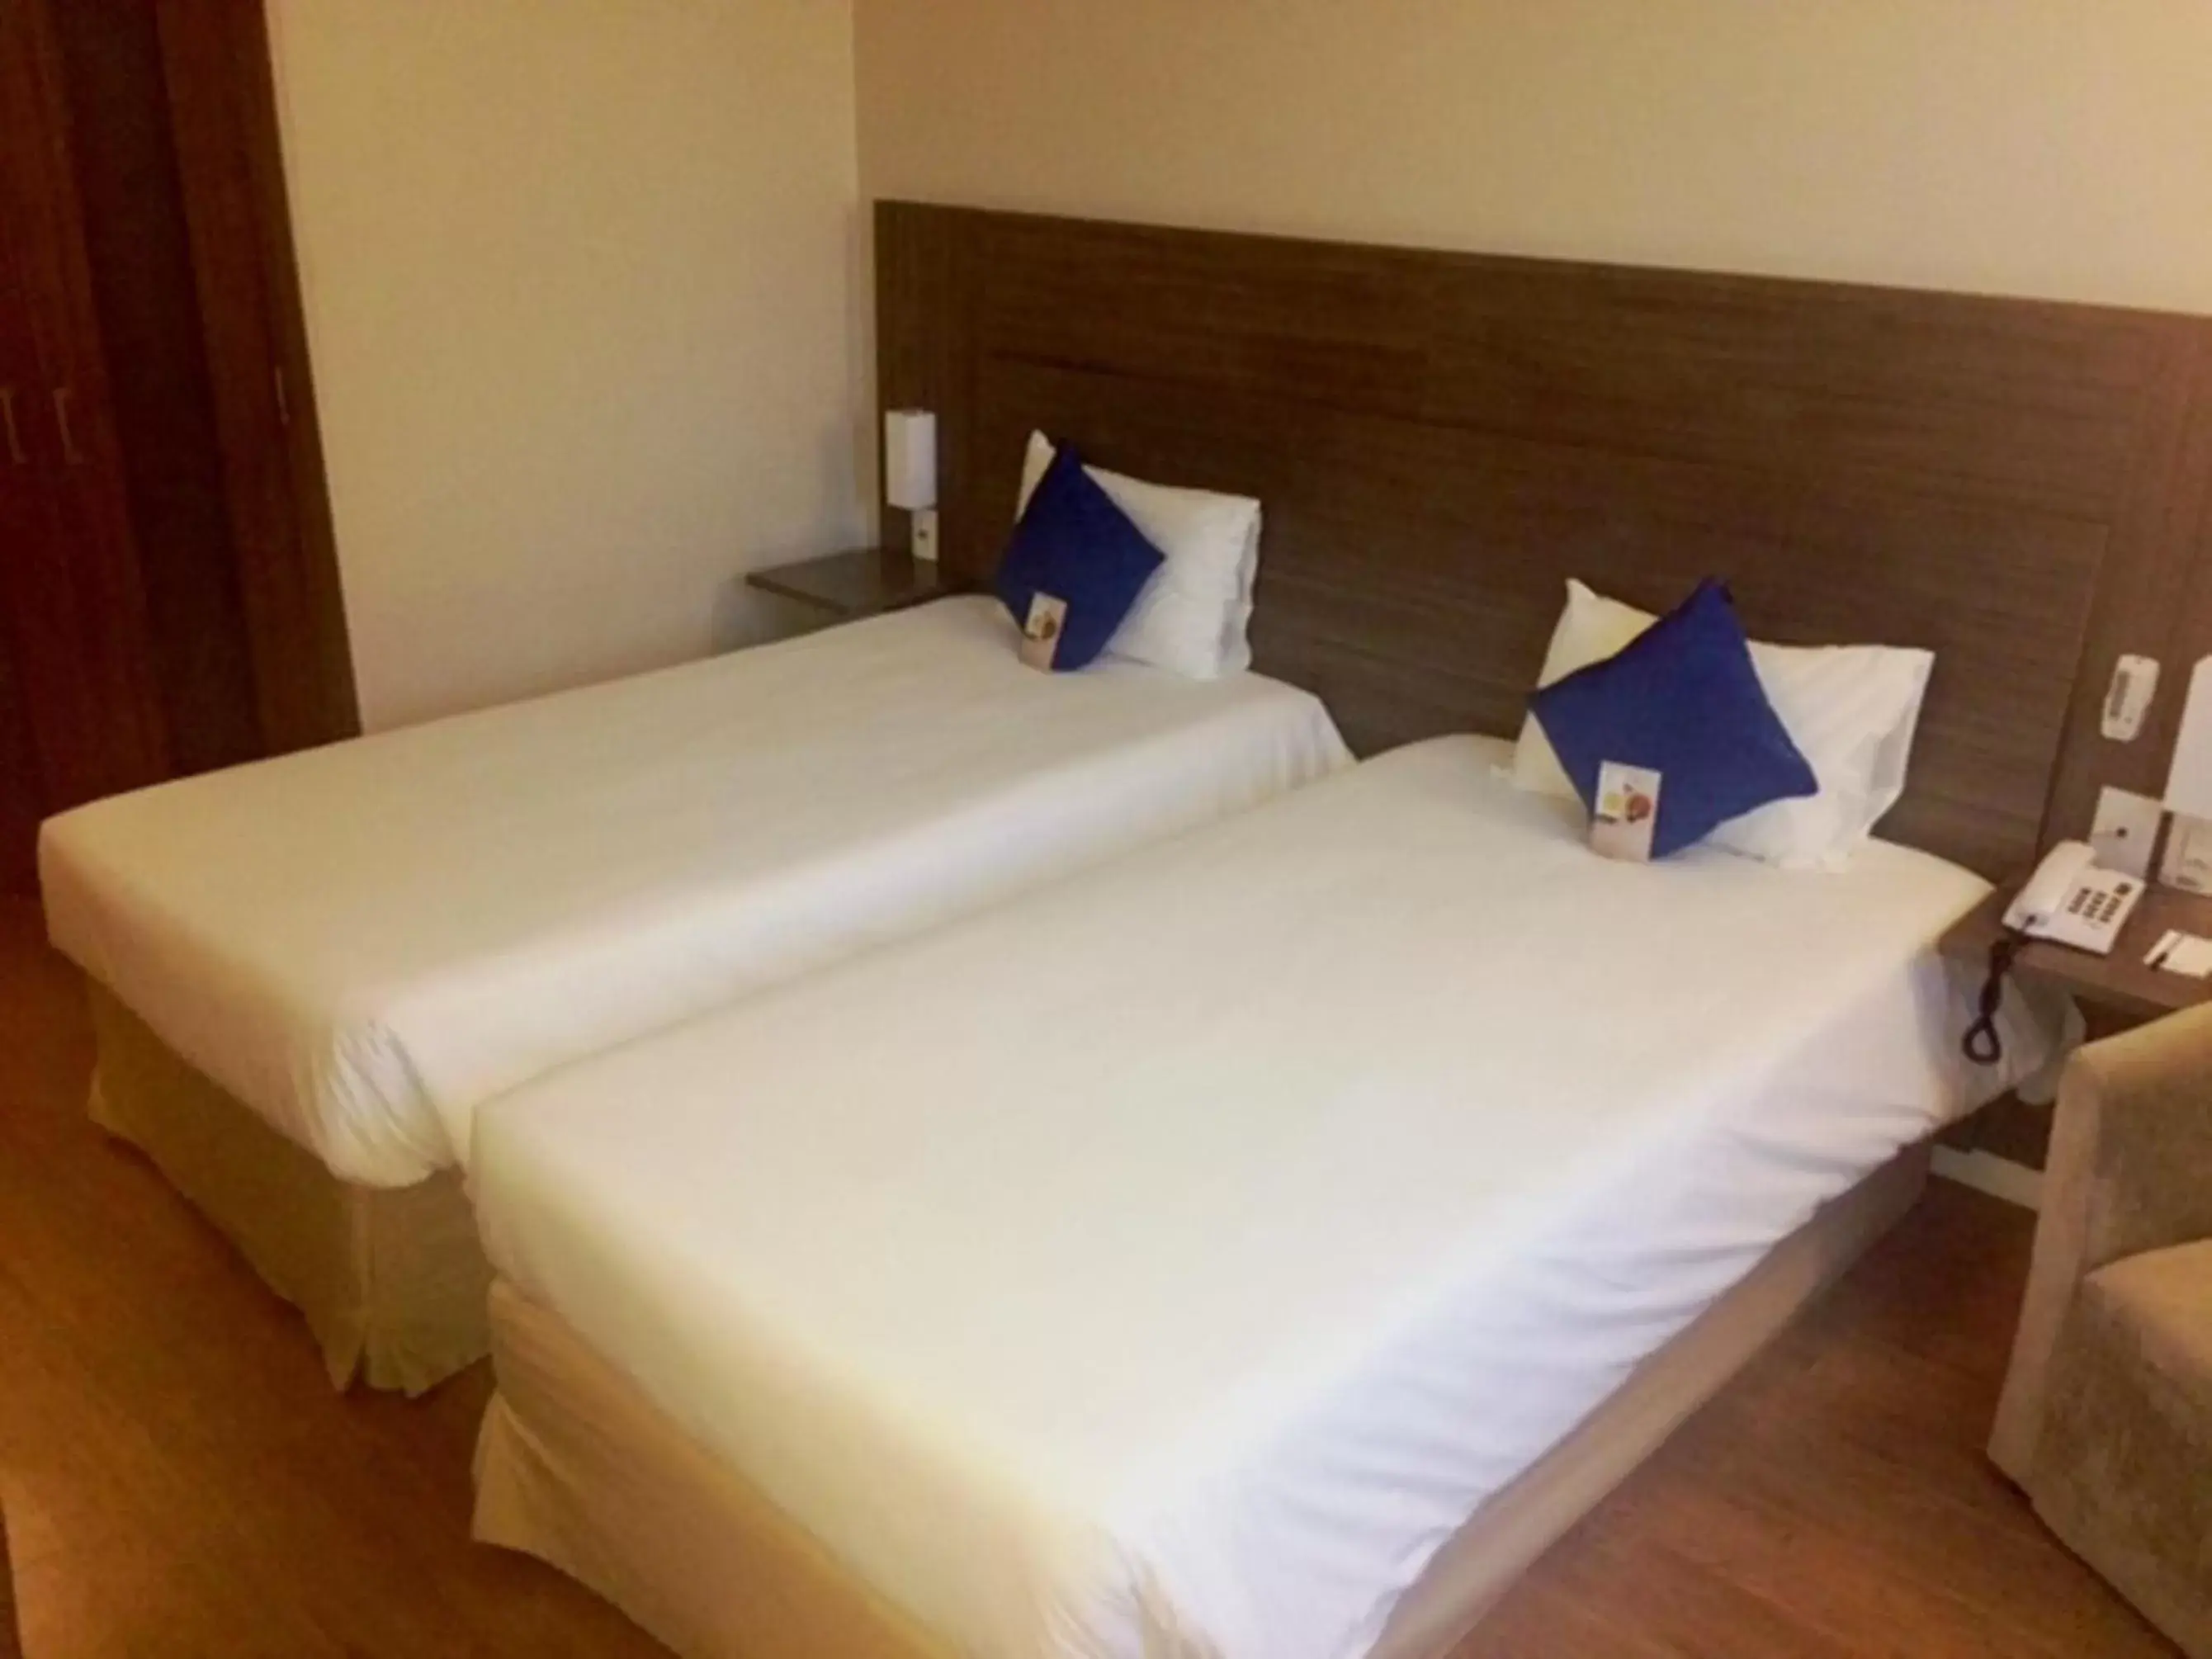 Bed, Room Photo in Novotel Manaus